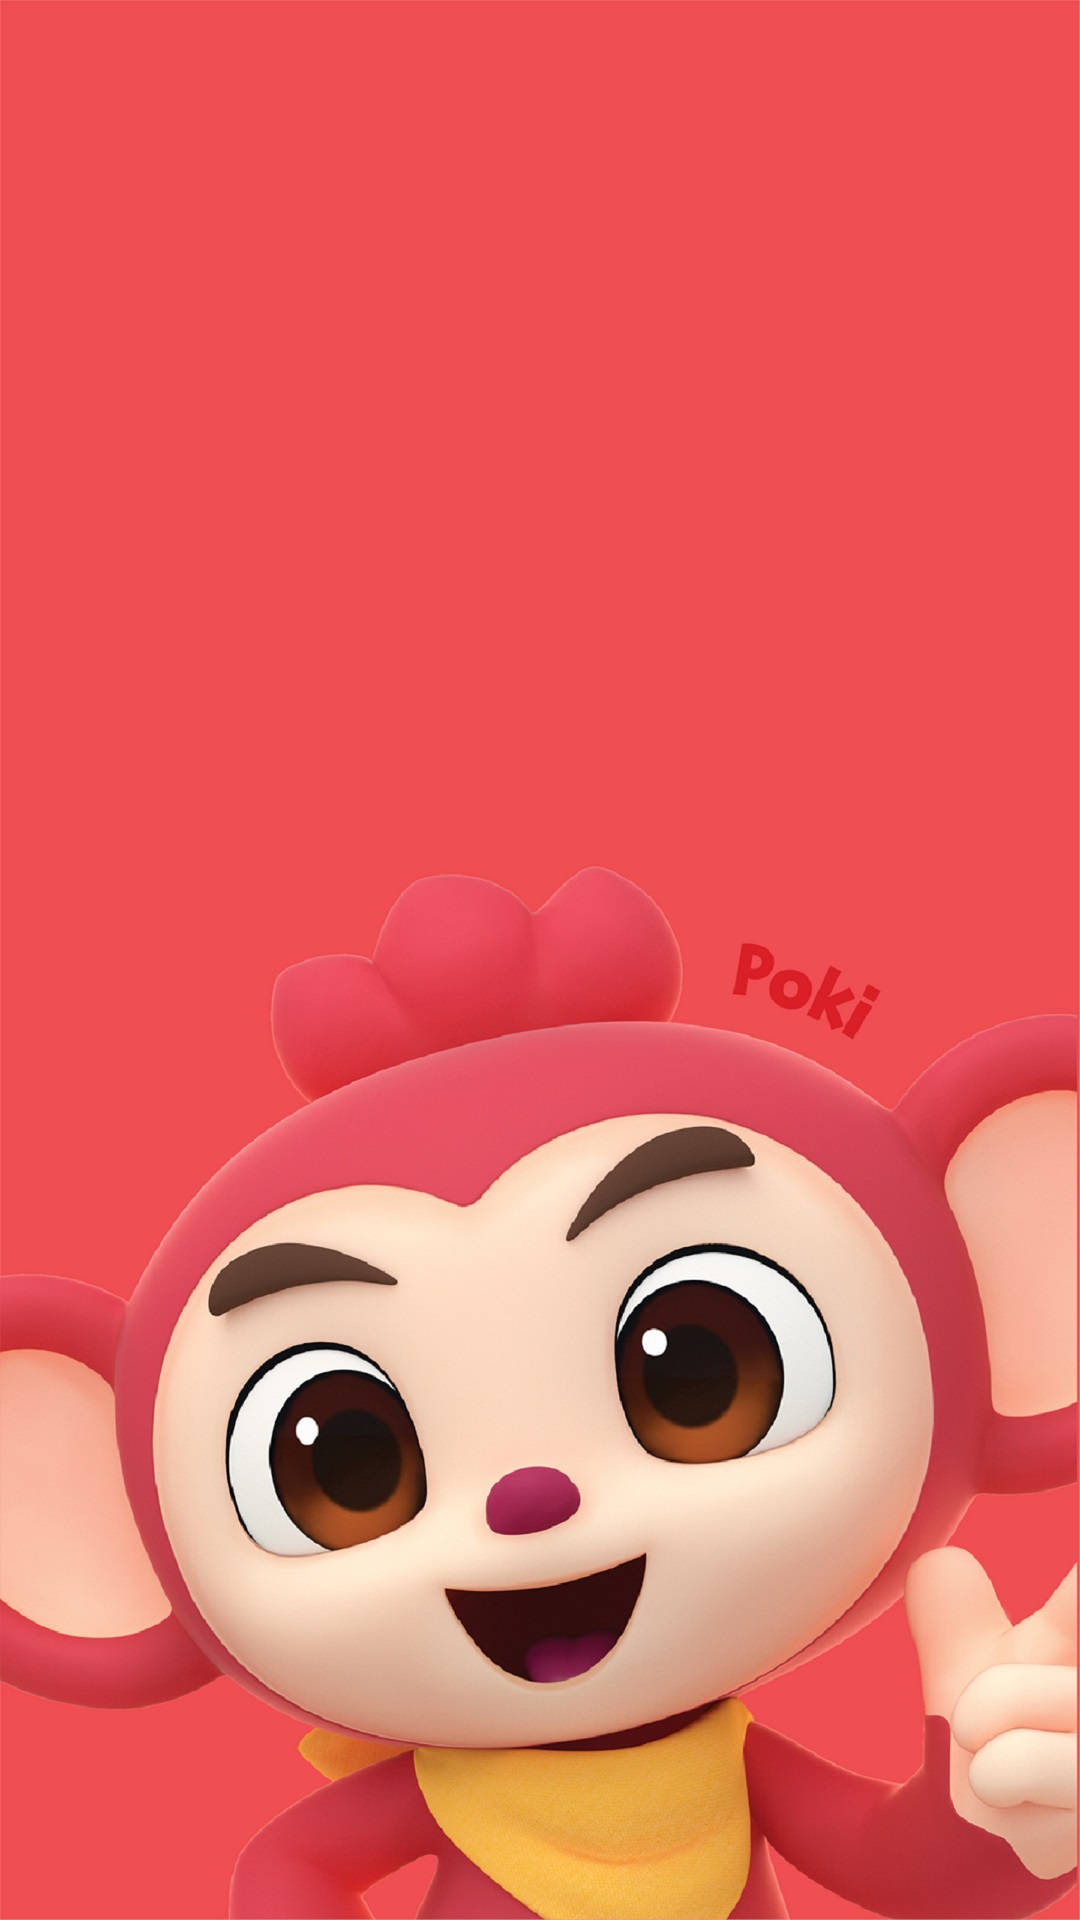 Pinkfong Poki Red Poster Wallpaper